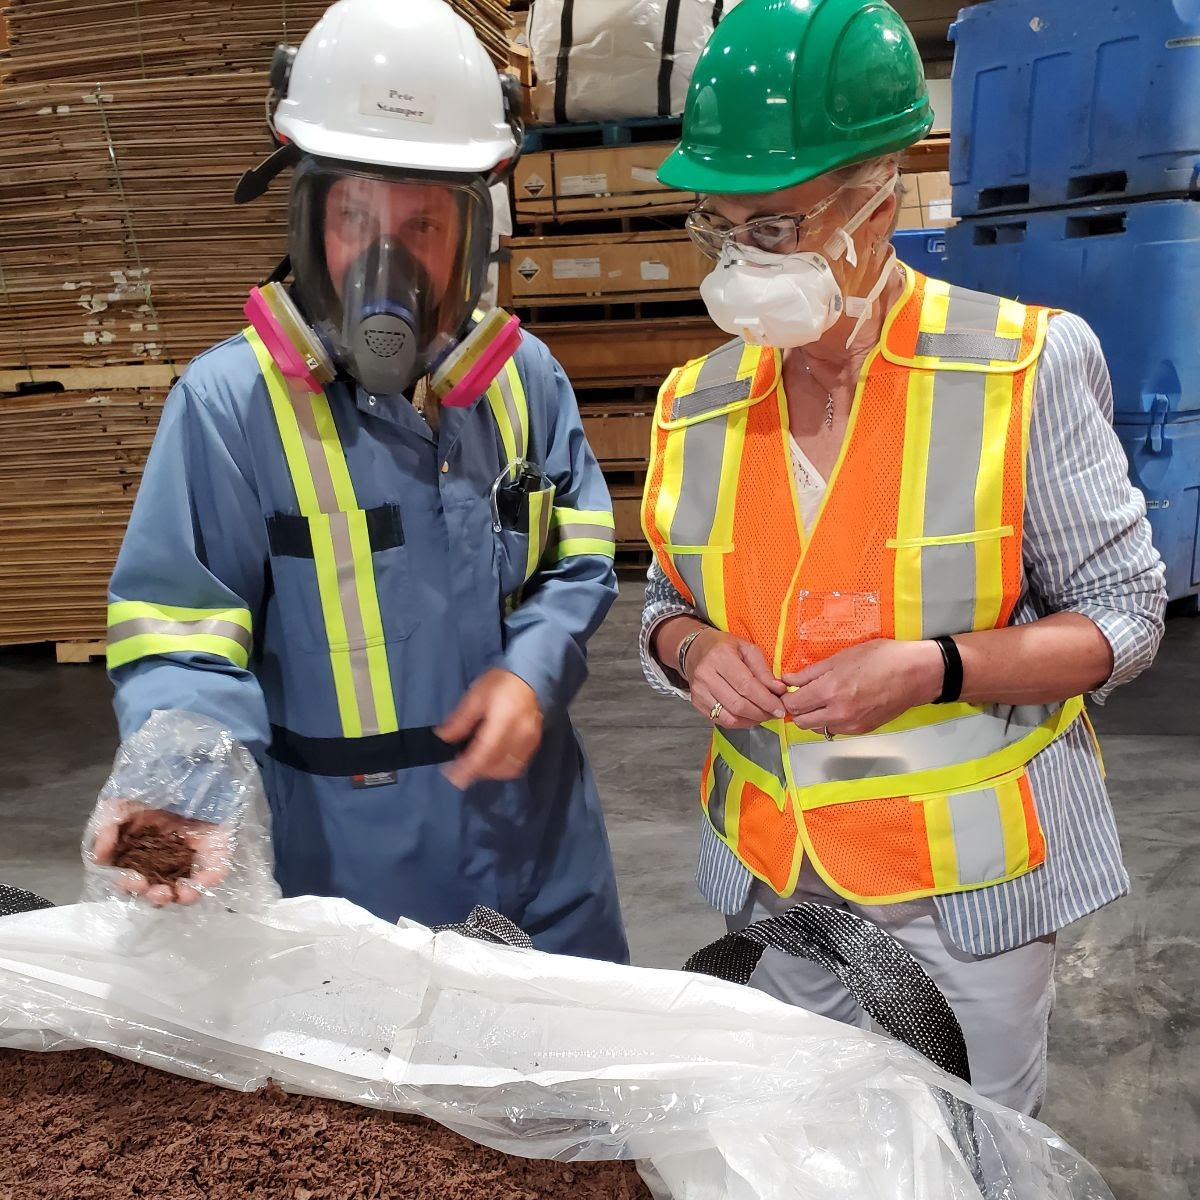 OP/ED: MLA Conroy tours/praises area recycling facility